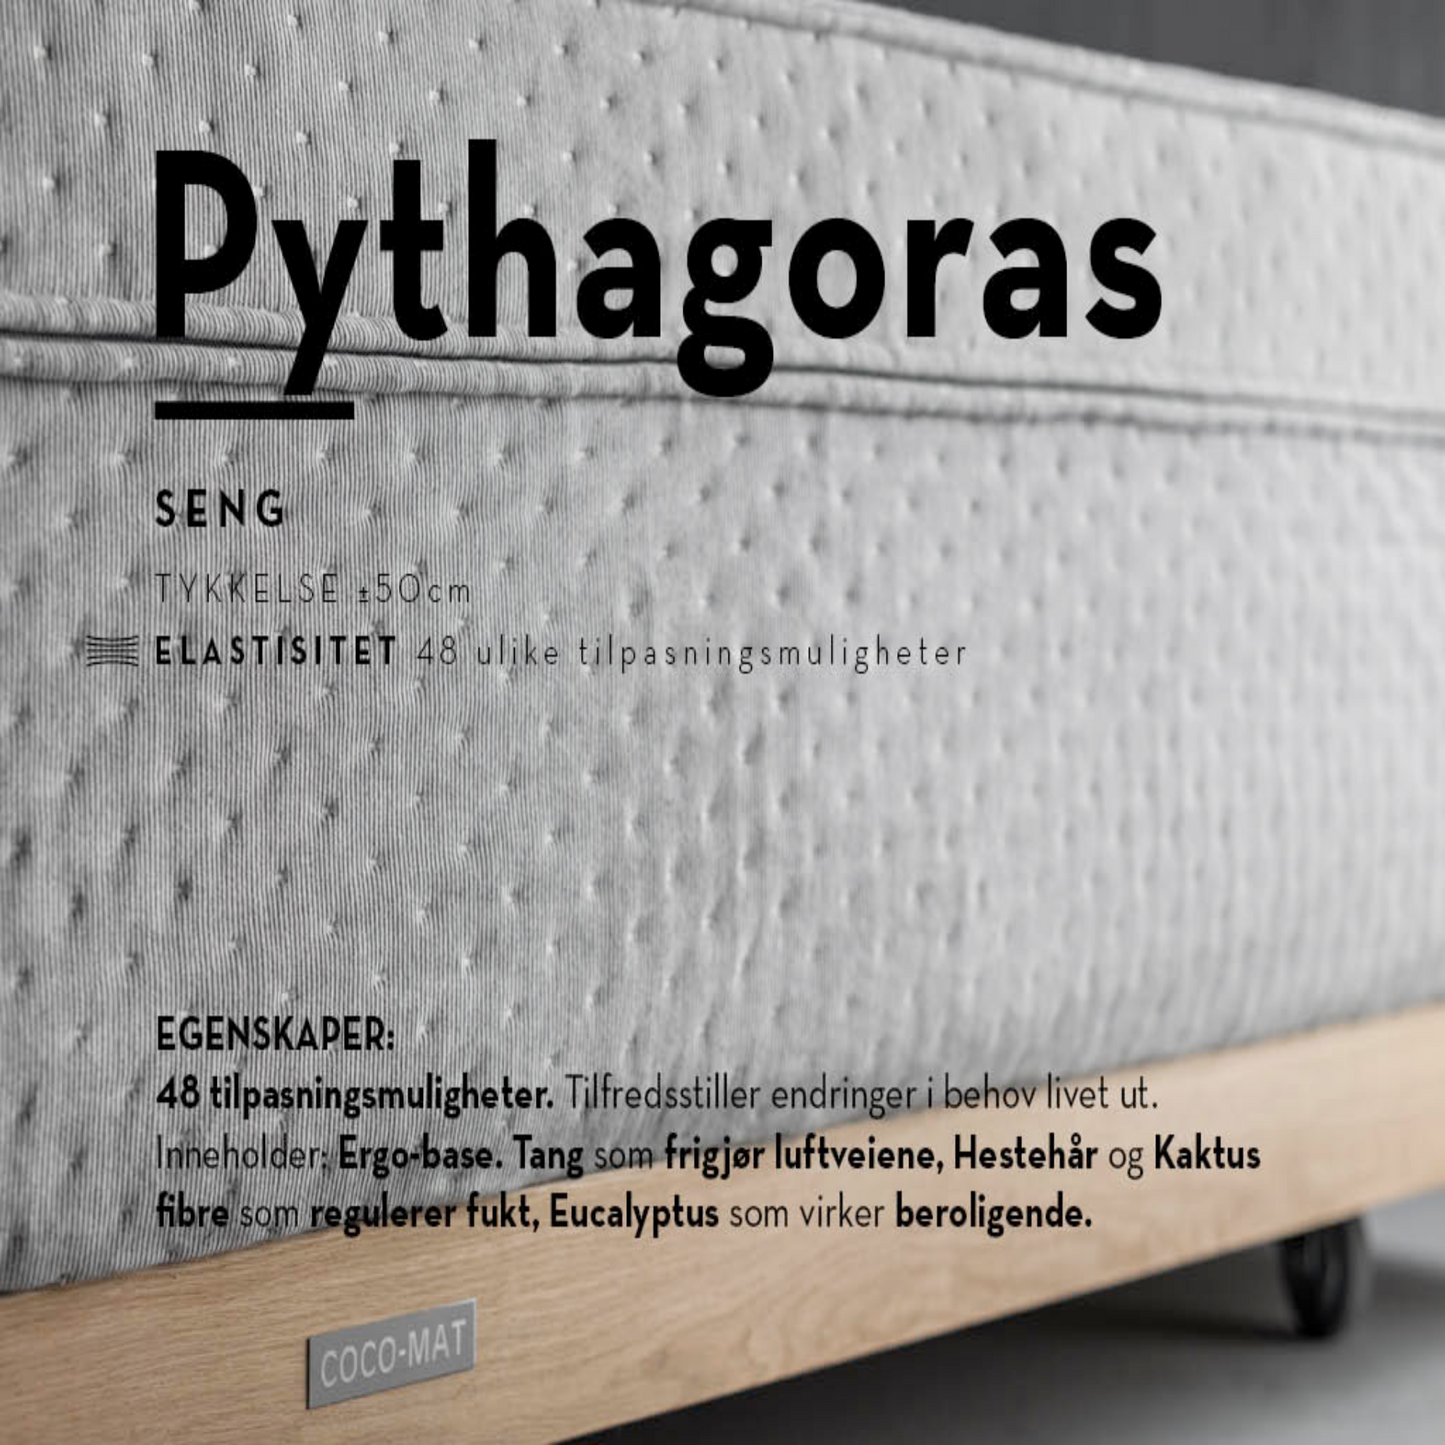 Pythagoras er en kompleks rammemadrass tilhørerende vårt skreddersydde Pythagoras sengesystem.